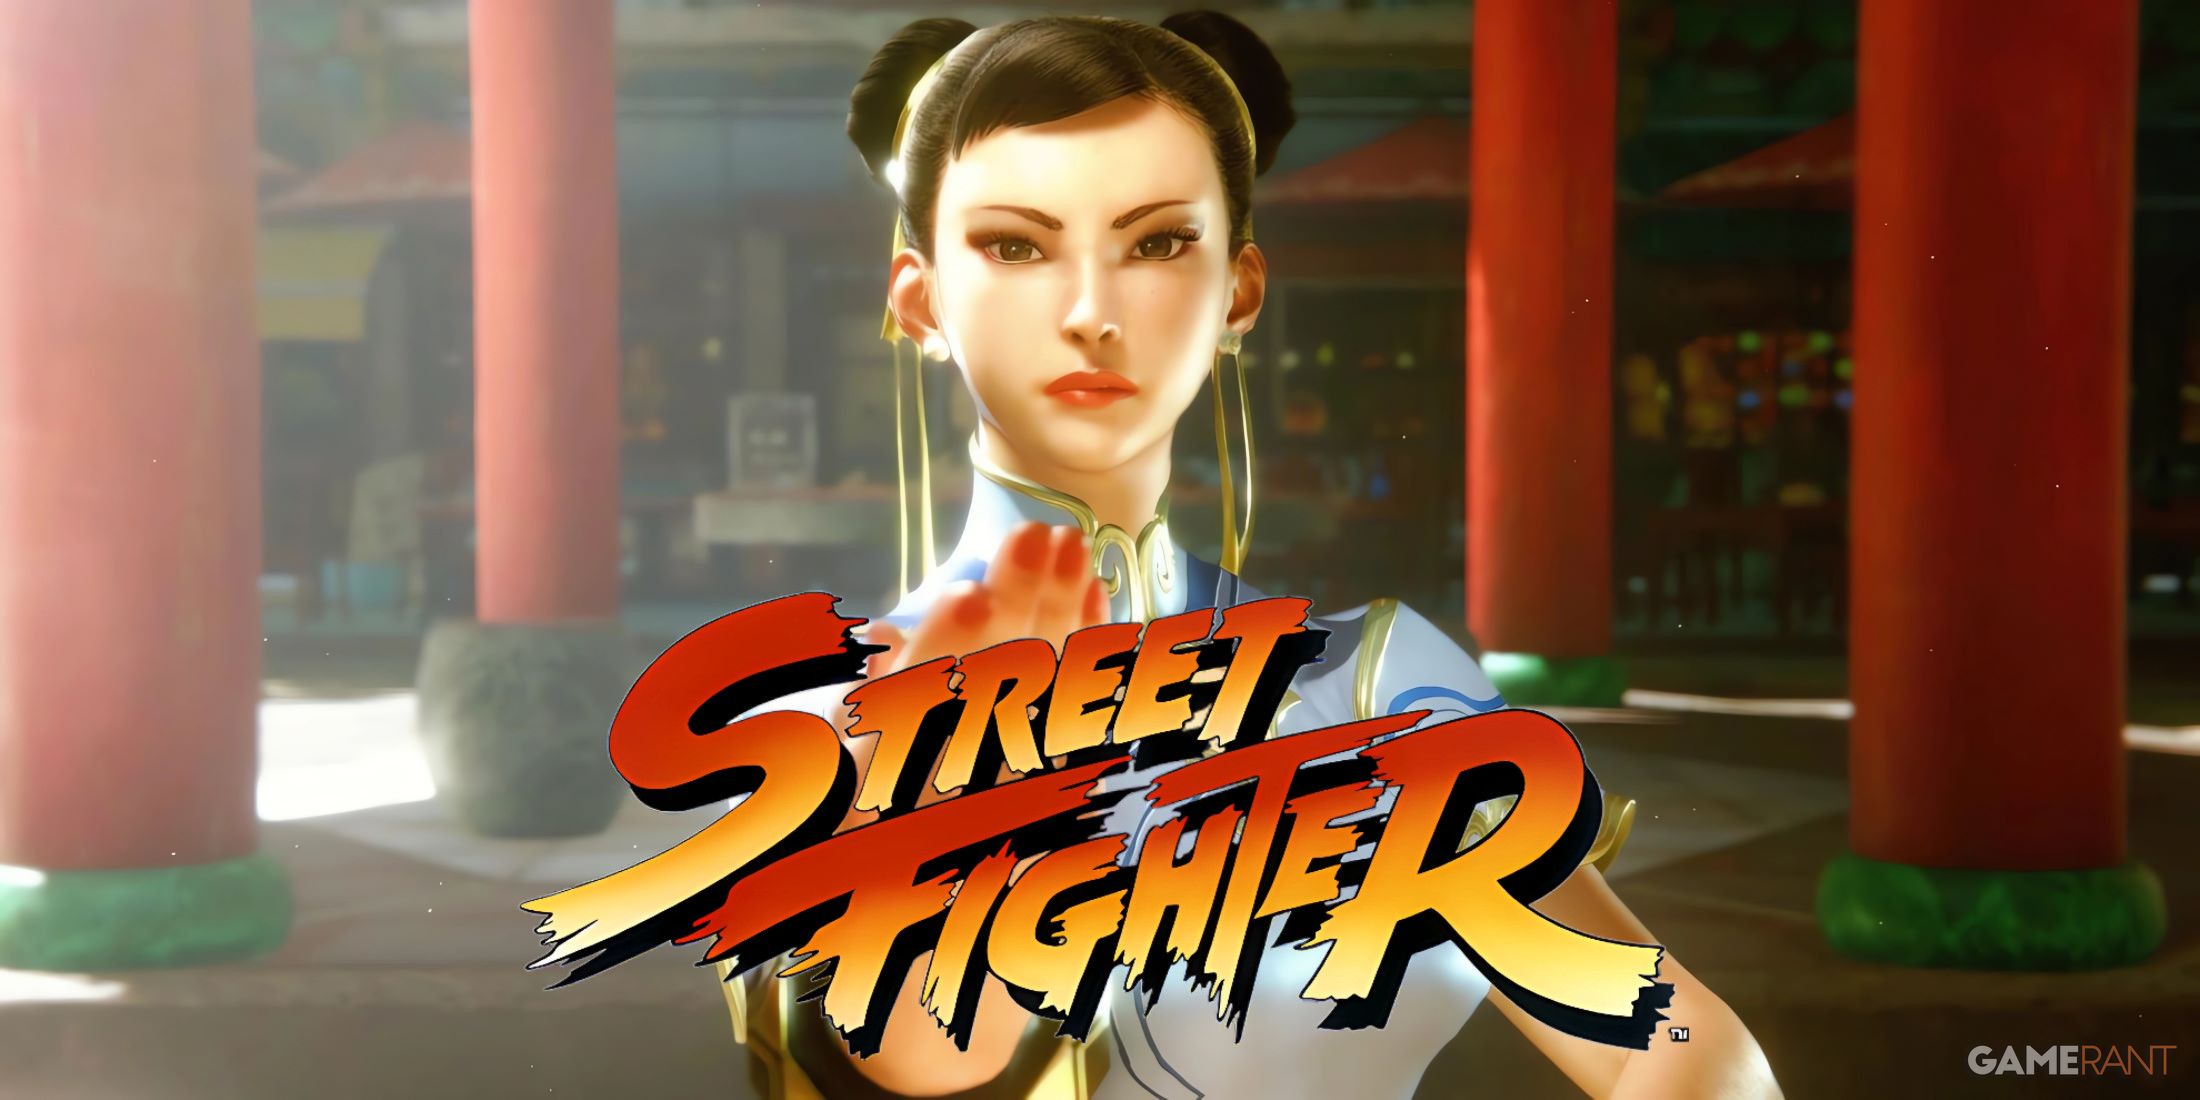 chun li in fighting pose with orange street fighter logo